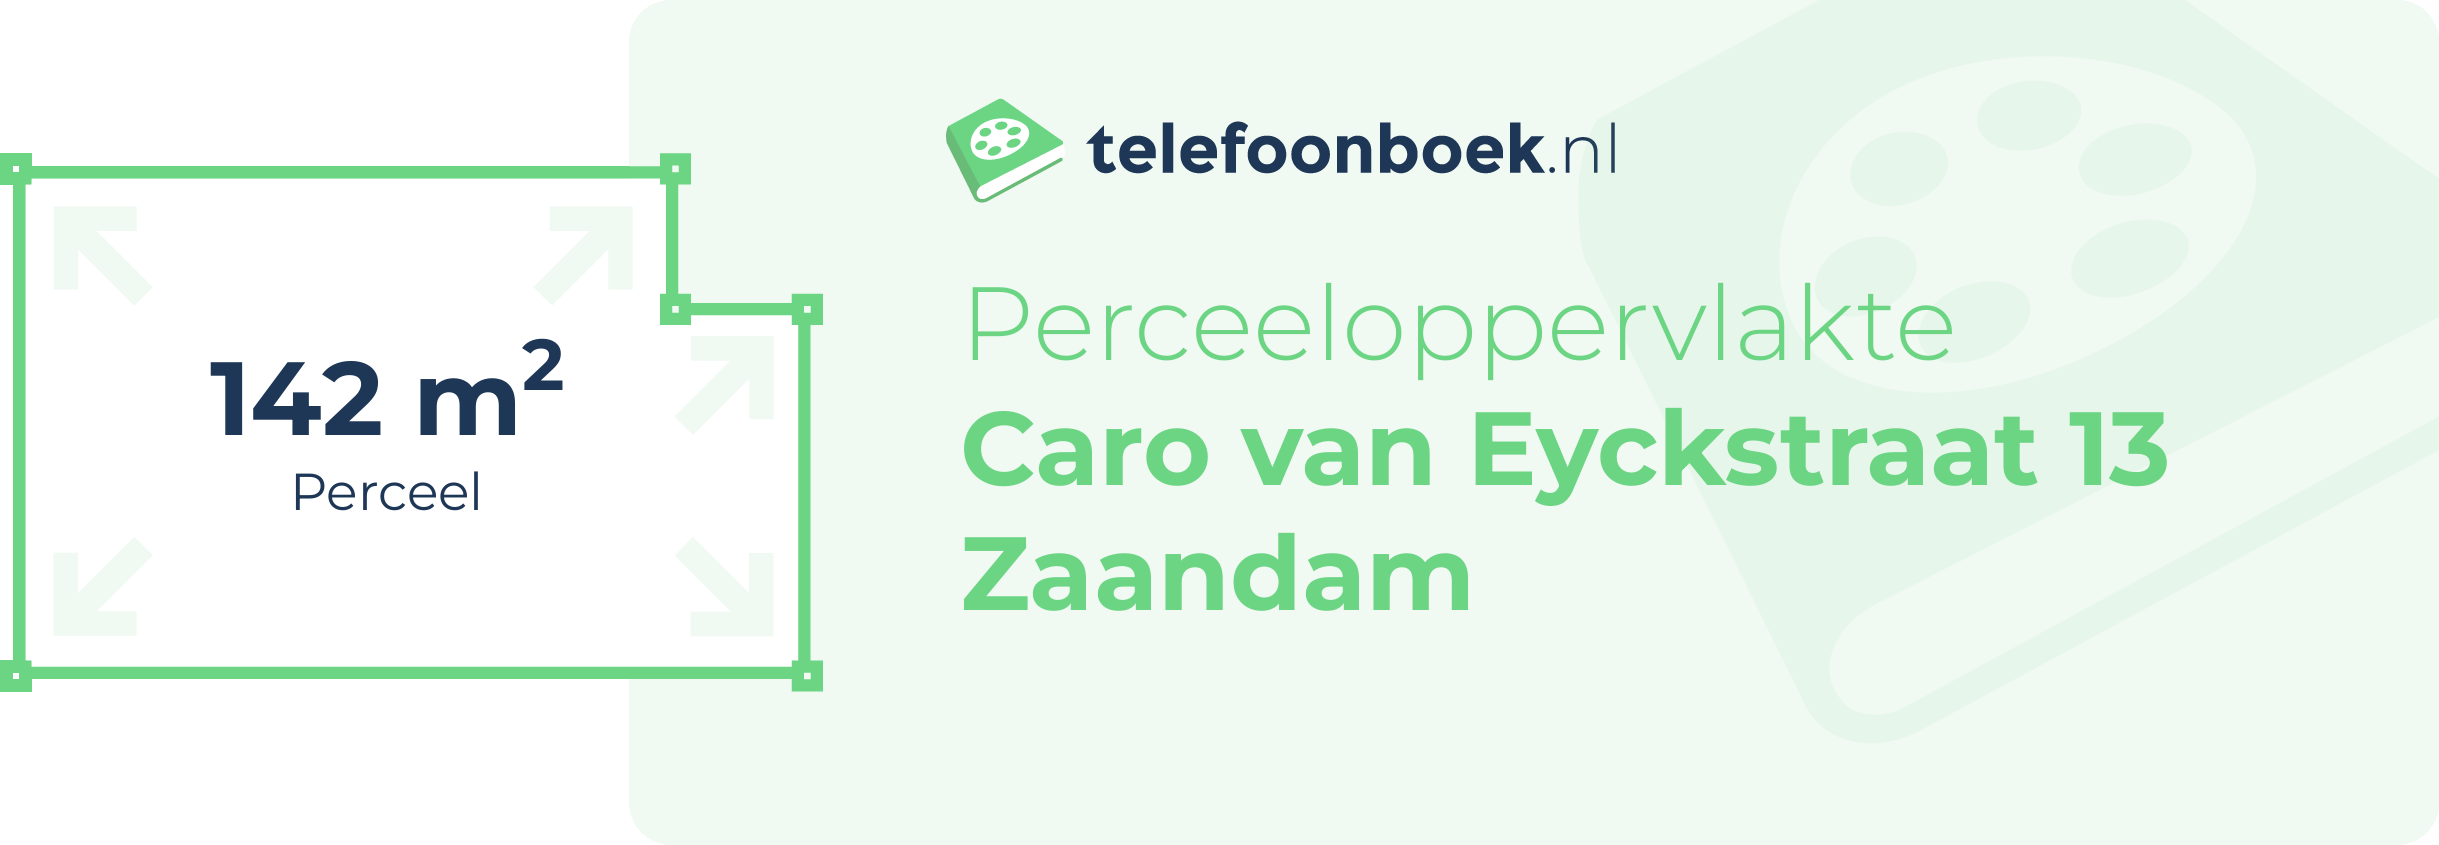 Perceeloppervlakte Caro Van Eyckstraat 13 Zaandam